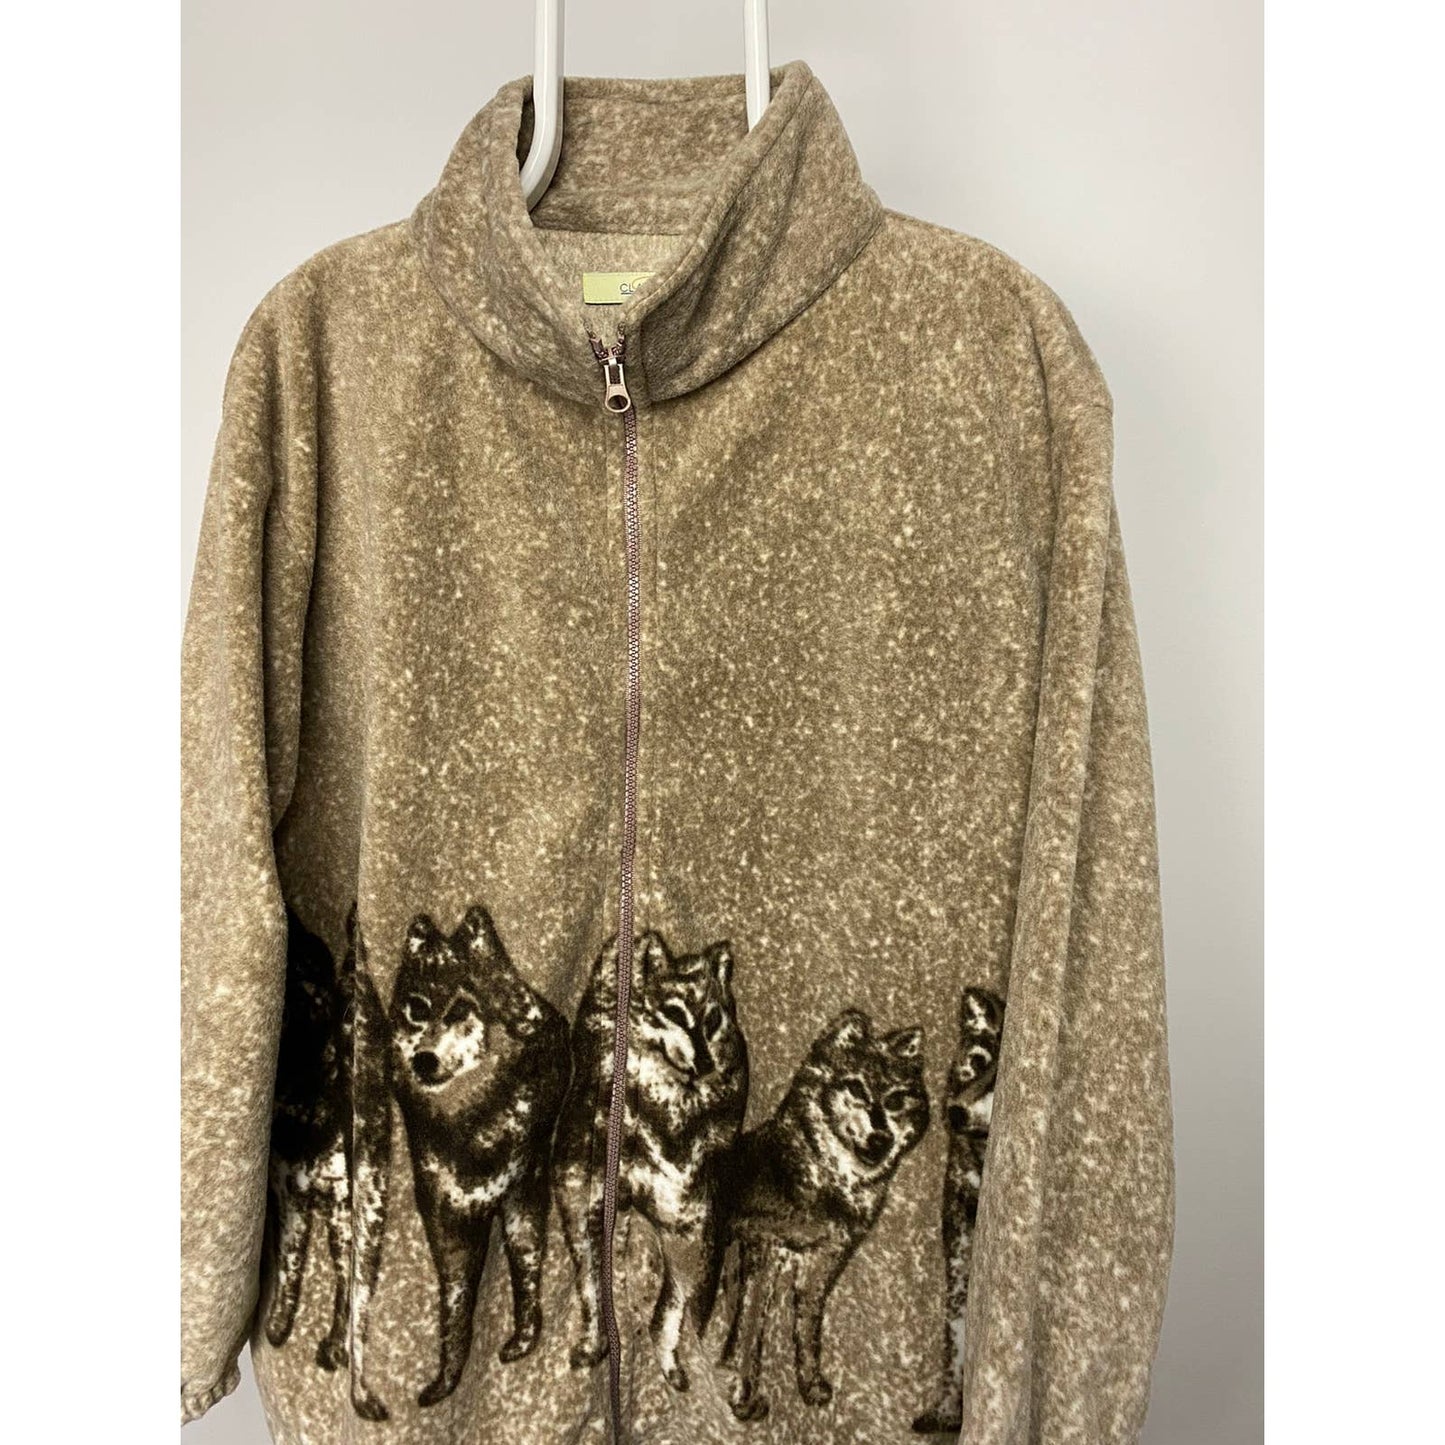 Vintage full print animal fleece sweatshirt zip up wolves